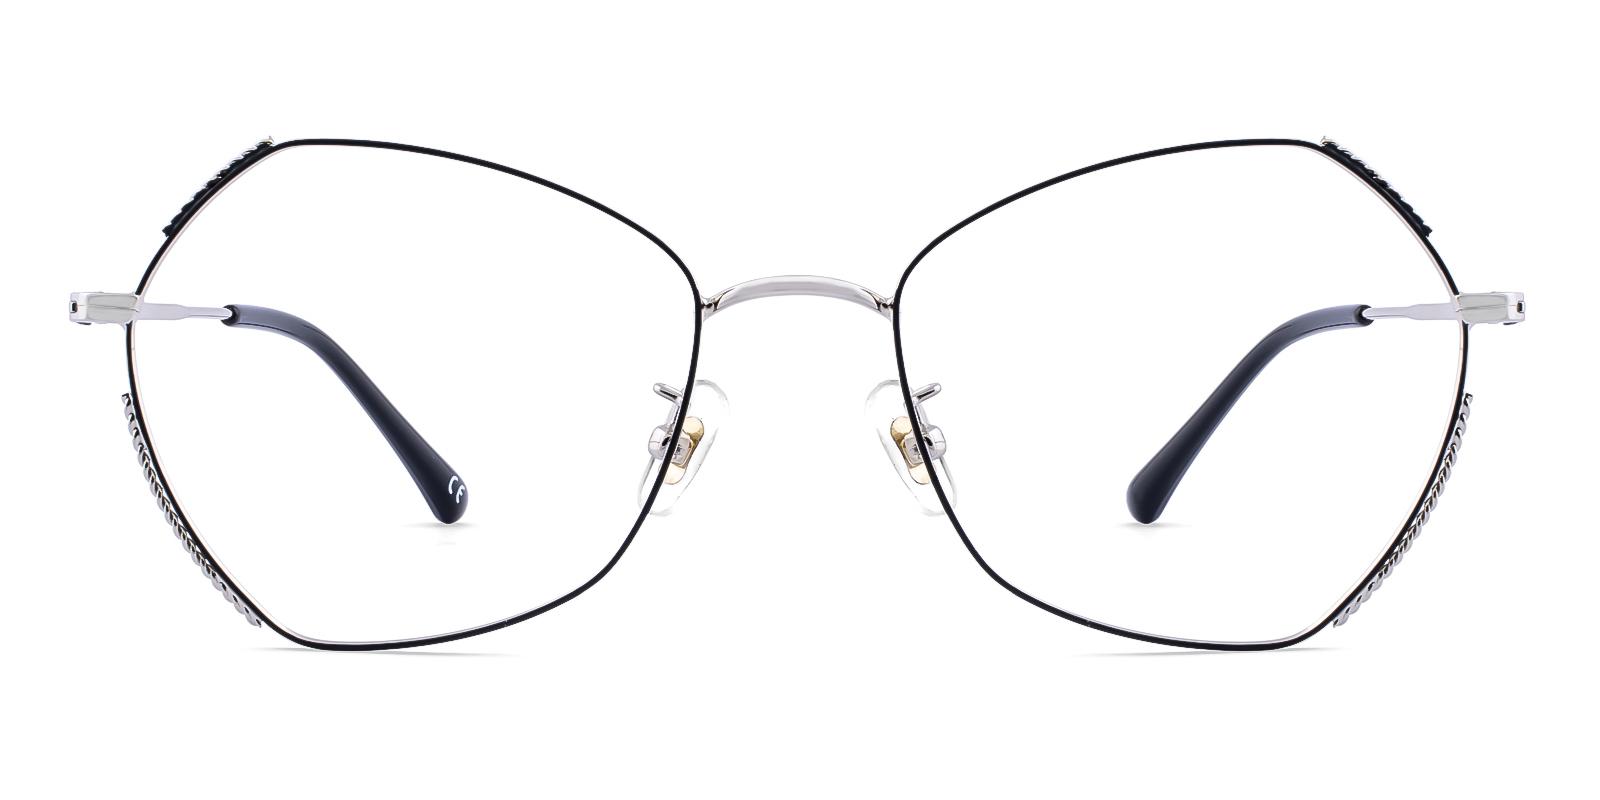 Dontic Black Metal Eyeglasses , NosePads Frames from ABBE Glasses